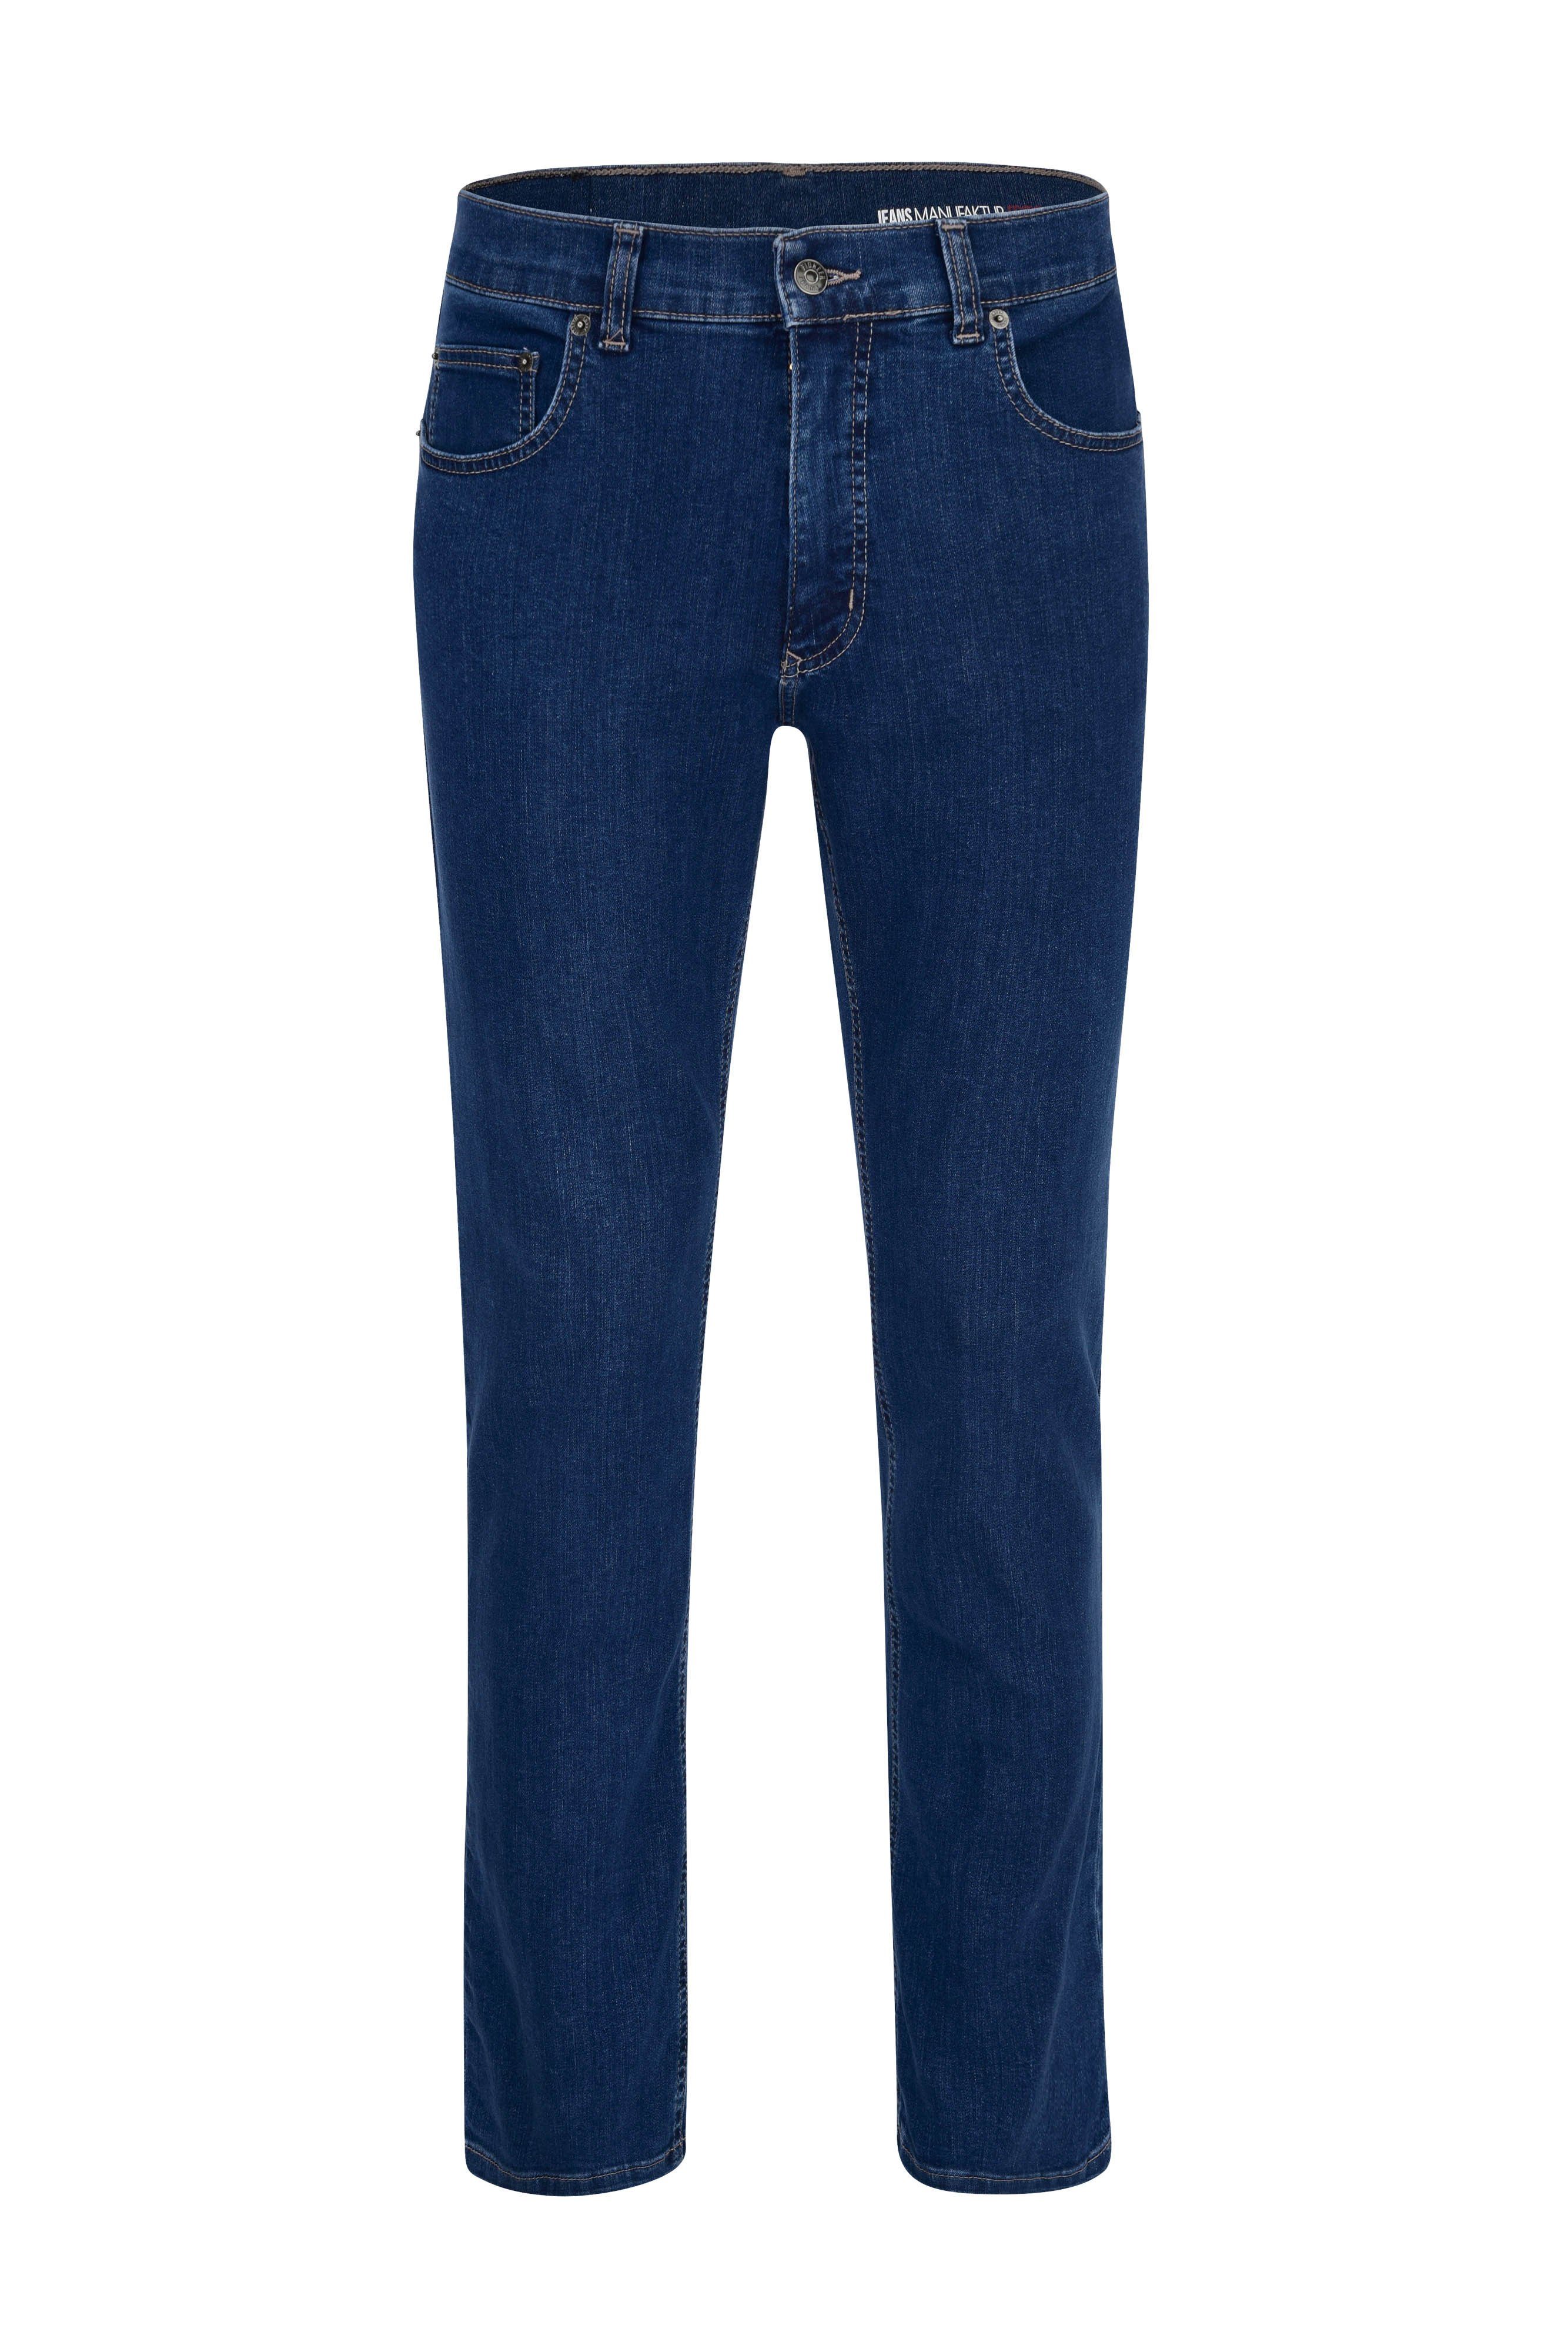 Pioneer Authentic Jeans 5-Pocket-Jeans PIONEER RON premium mid blue 1184 9818.05 - Jeans Manufaktur Edition